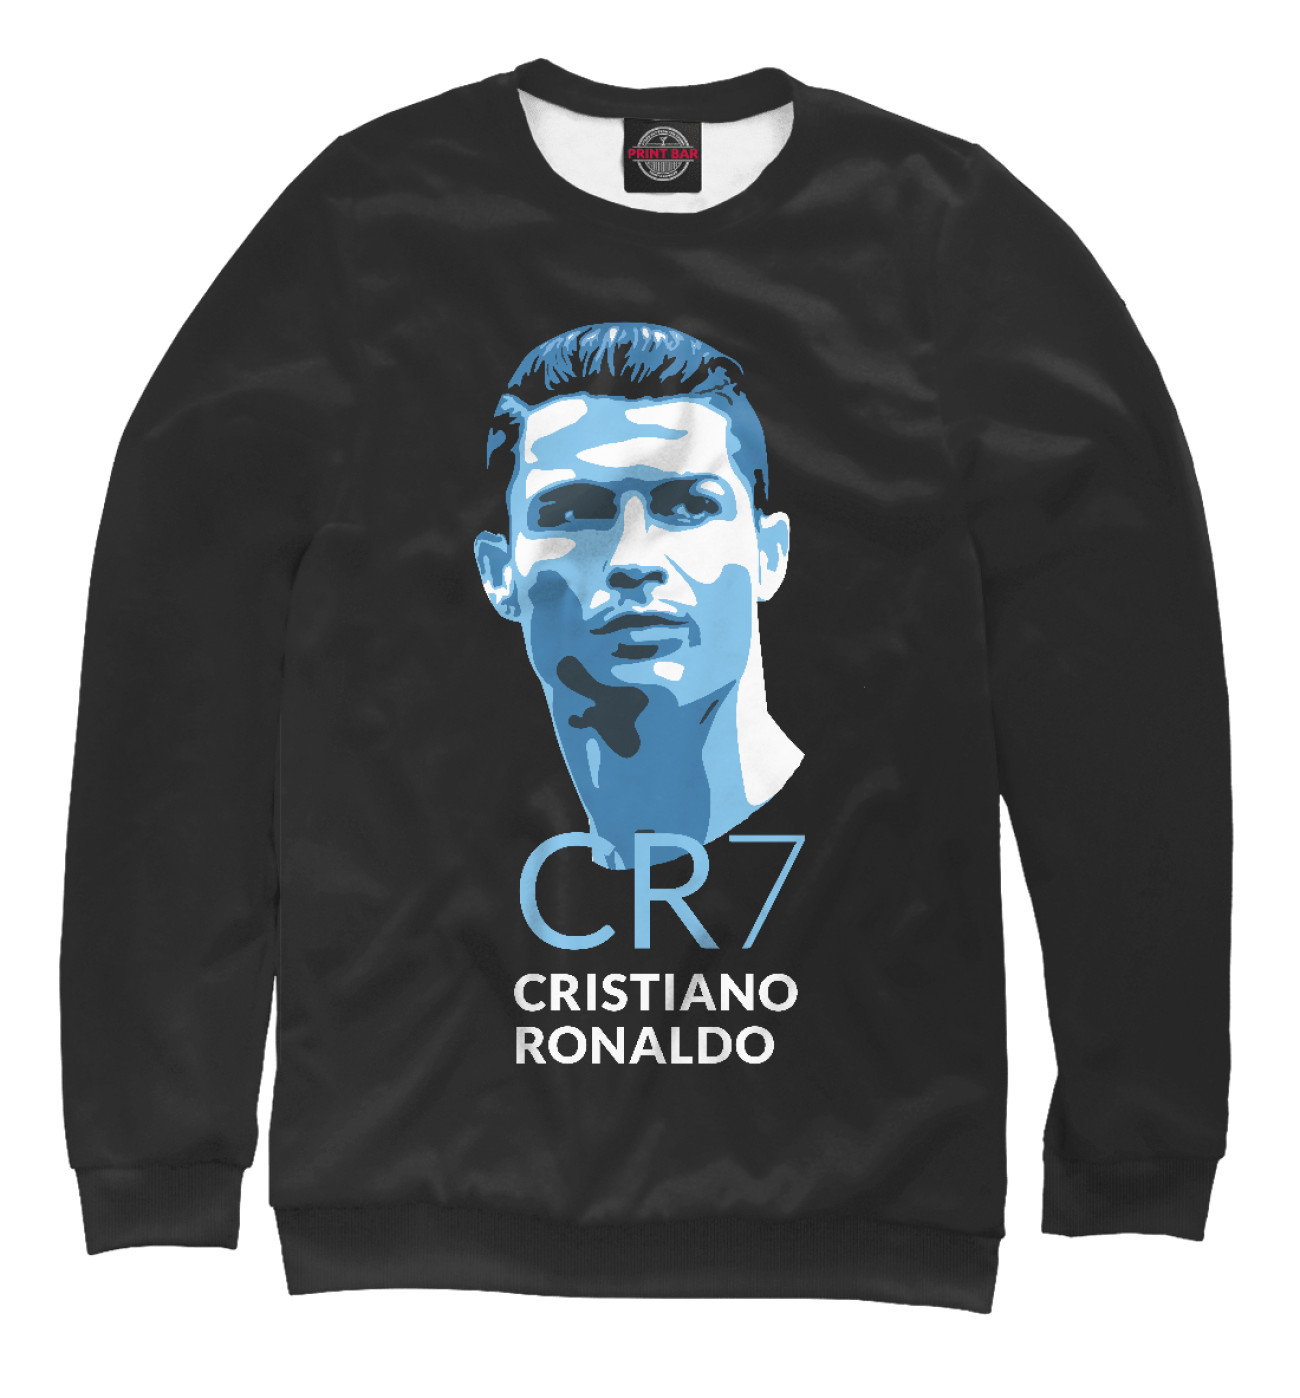 Женский Свитшот Cristiano Ronaldo, артикул: CRR-508879-swi-1